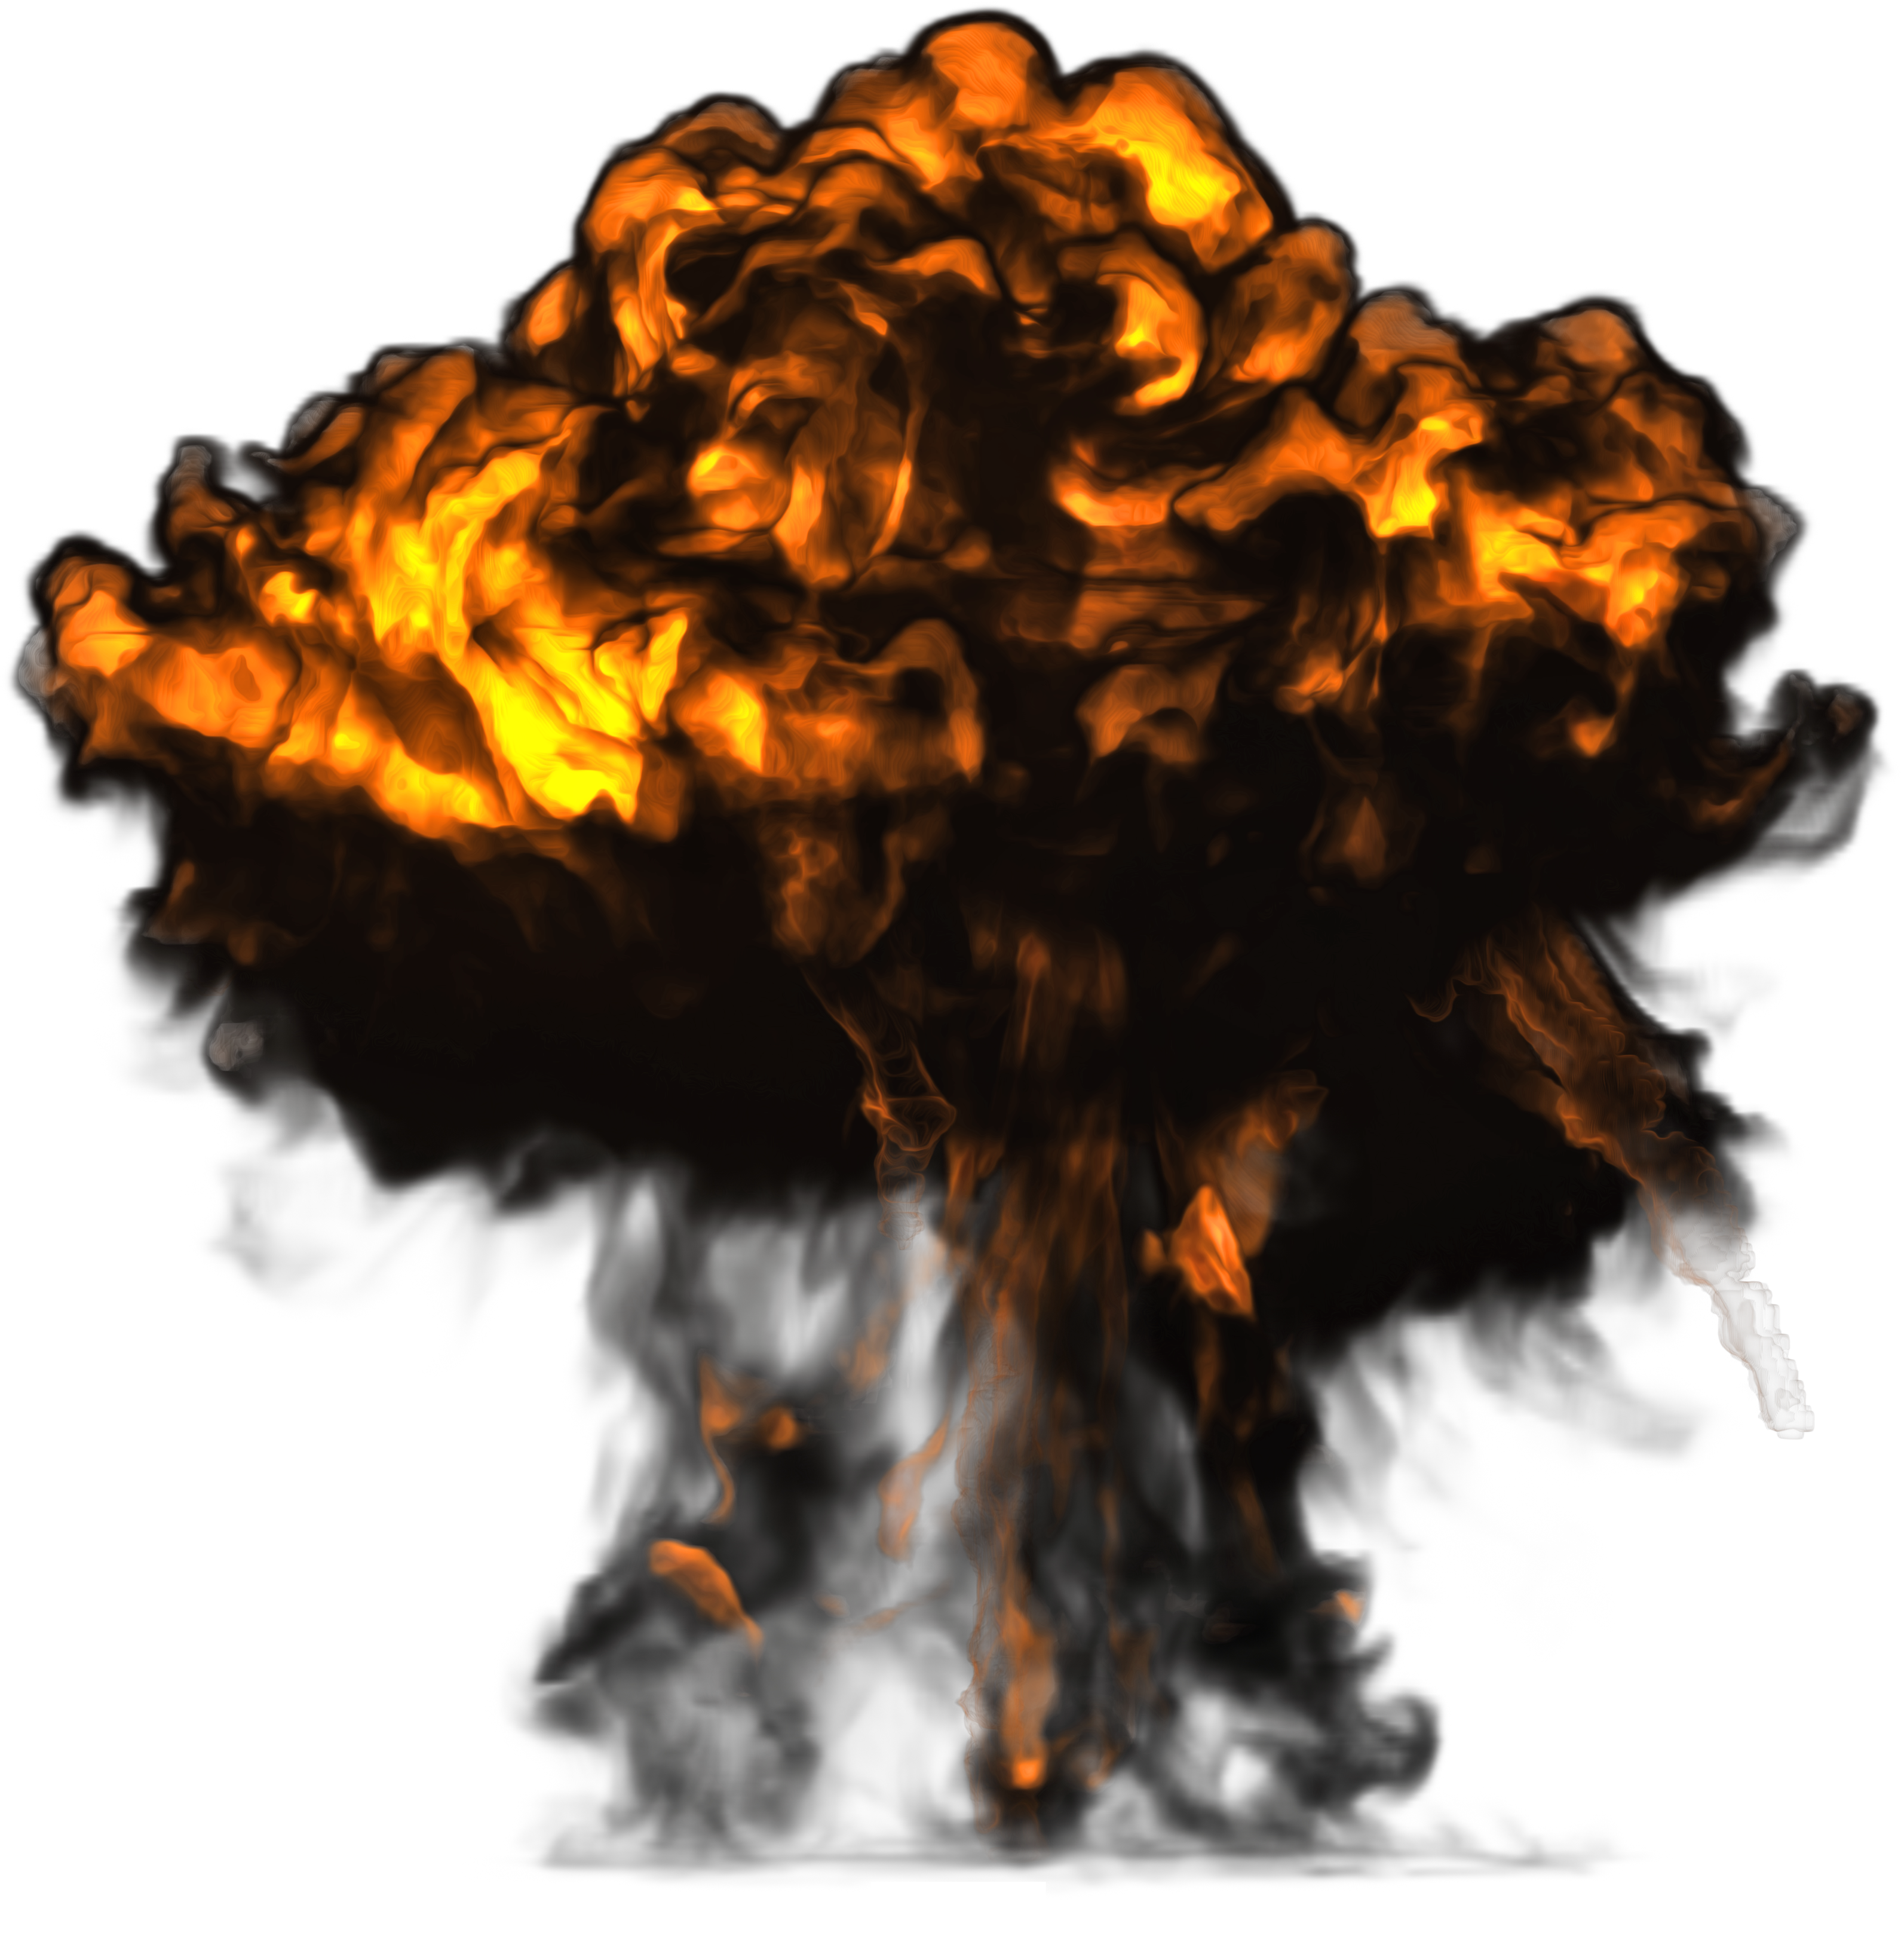 big explosion with dark smoke